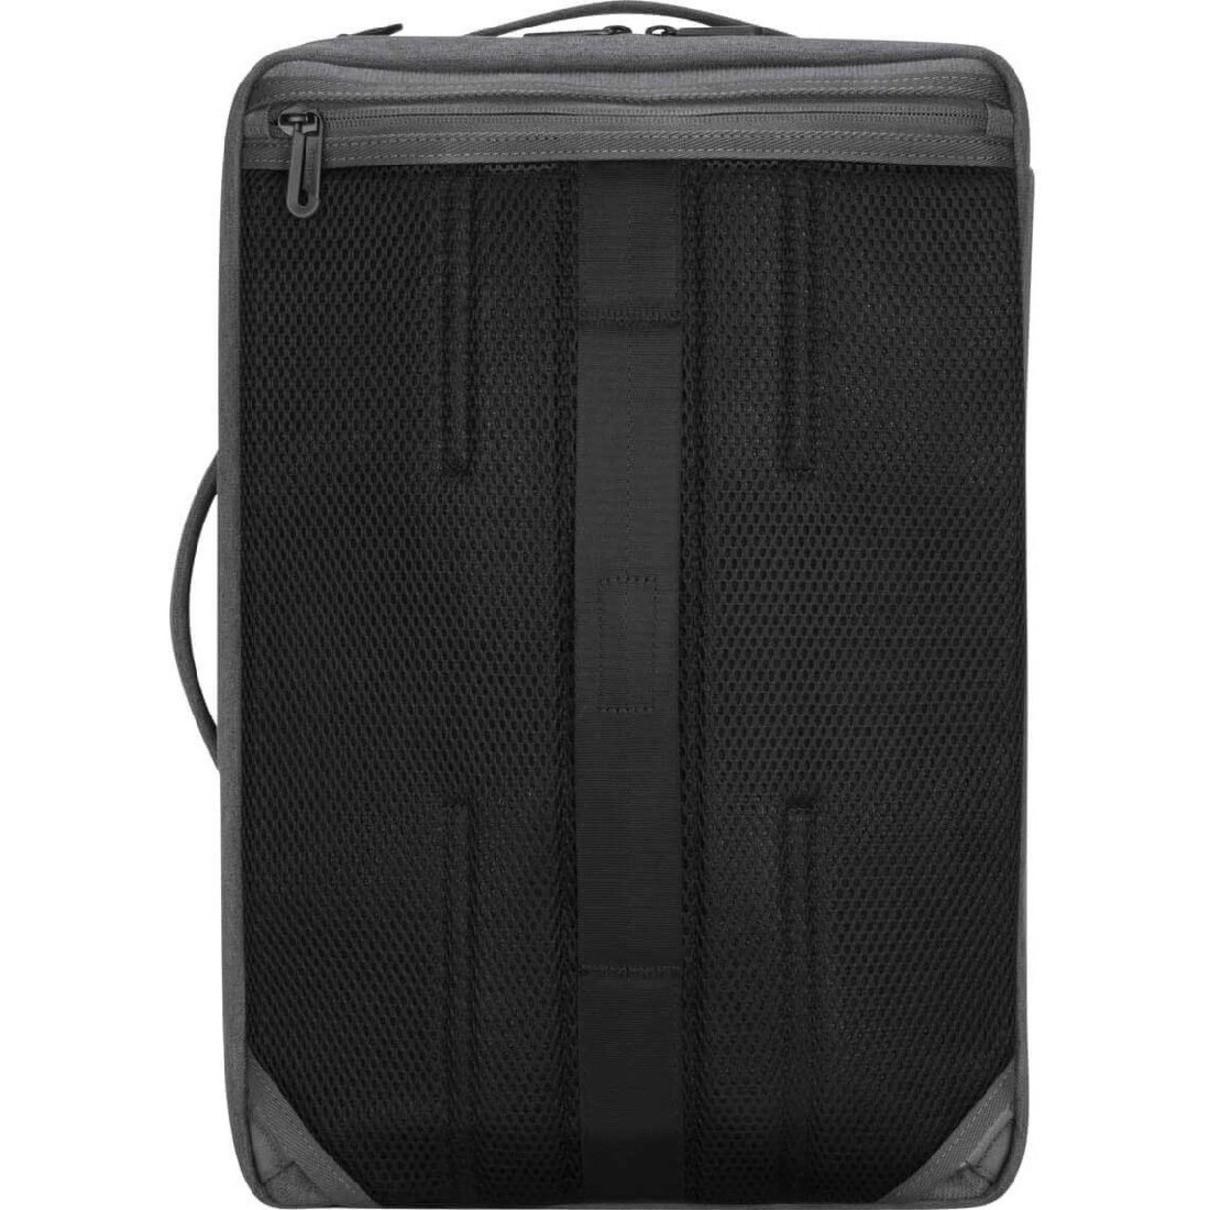 Targus Cypress TBB58702GL Carrying Case (Backpack) for 15.6″ NotebookLight GrayFabric BodyShoulder Strap, Handle, Trolley Strap12… TBB58702GL